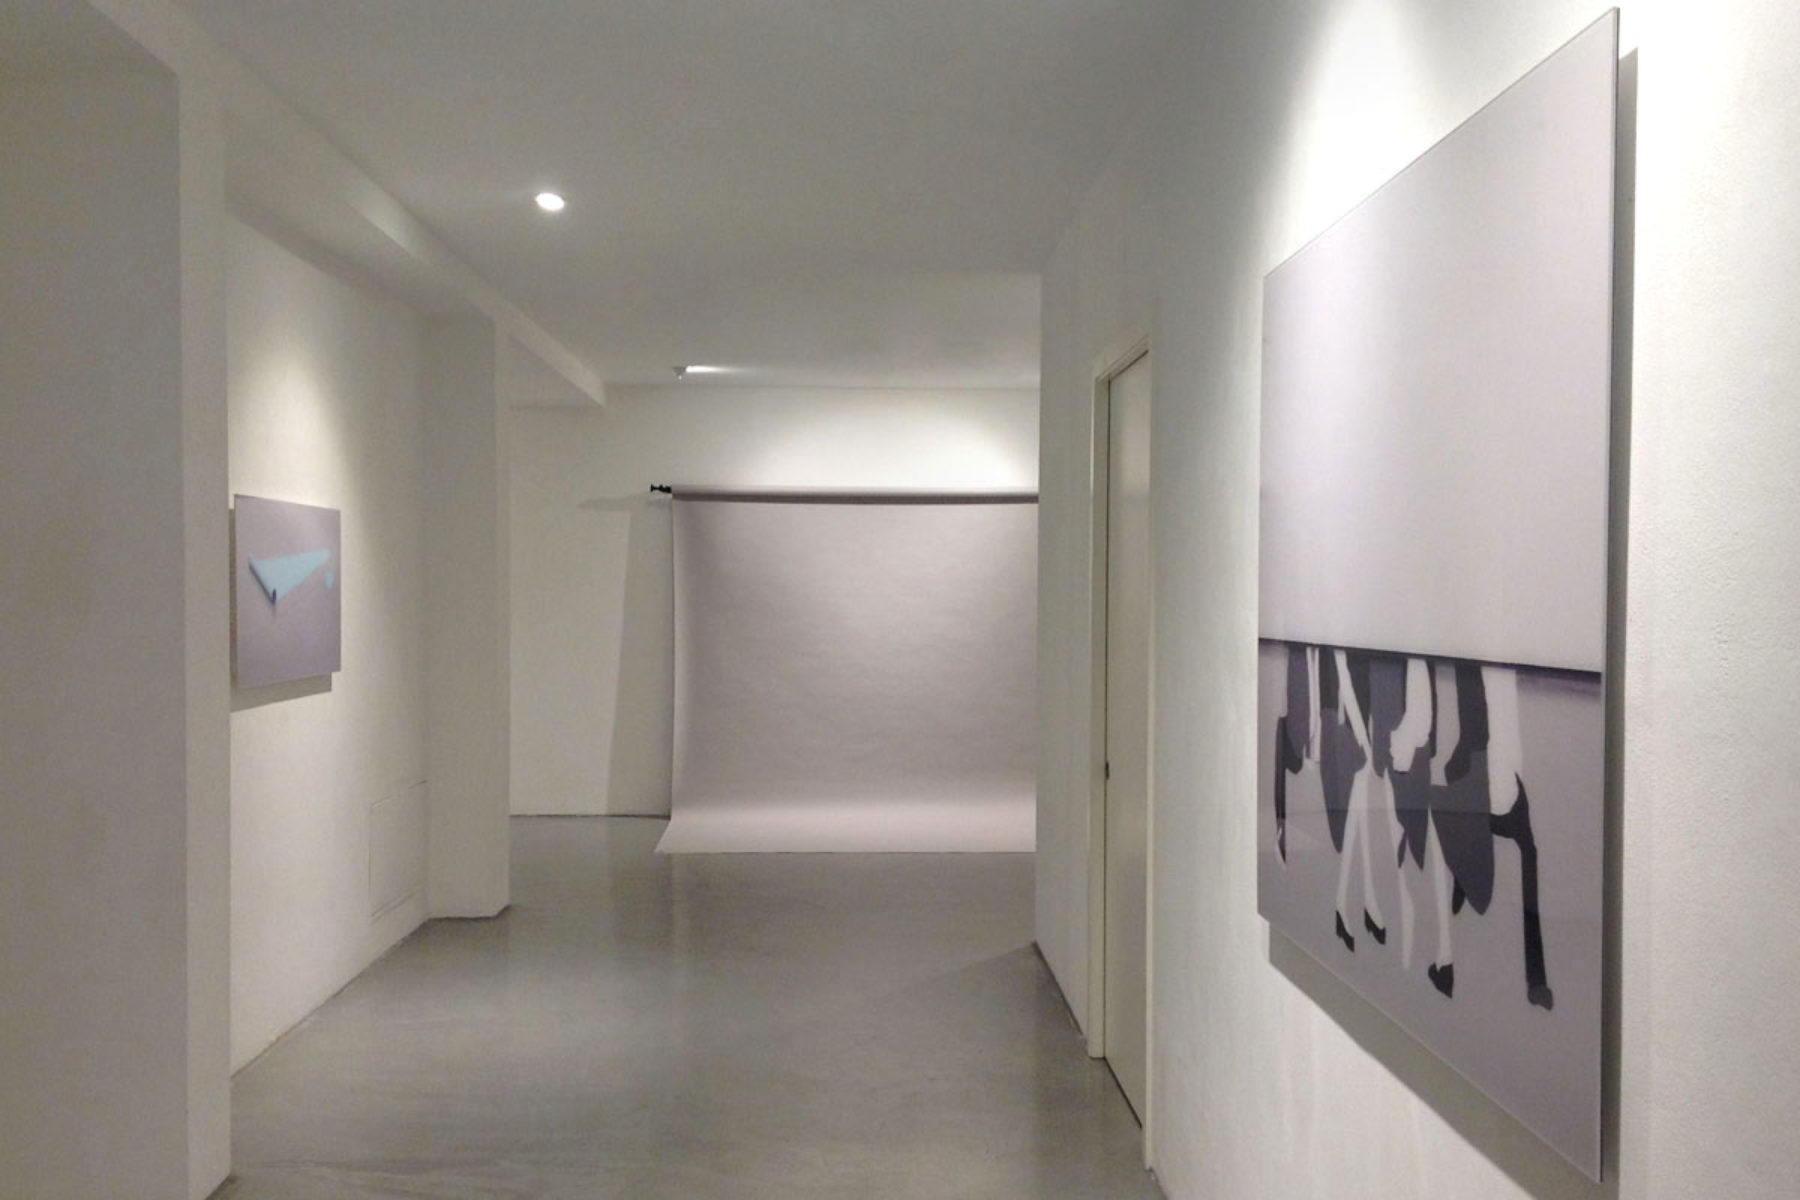 I. Eškinja, Infinity paper, 2013, show view at Deanesi Gallery, 02